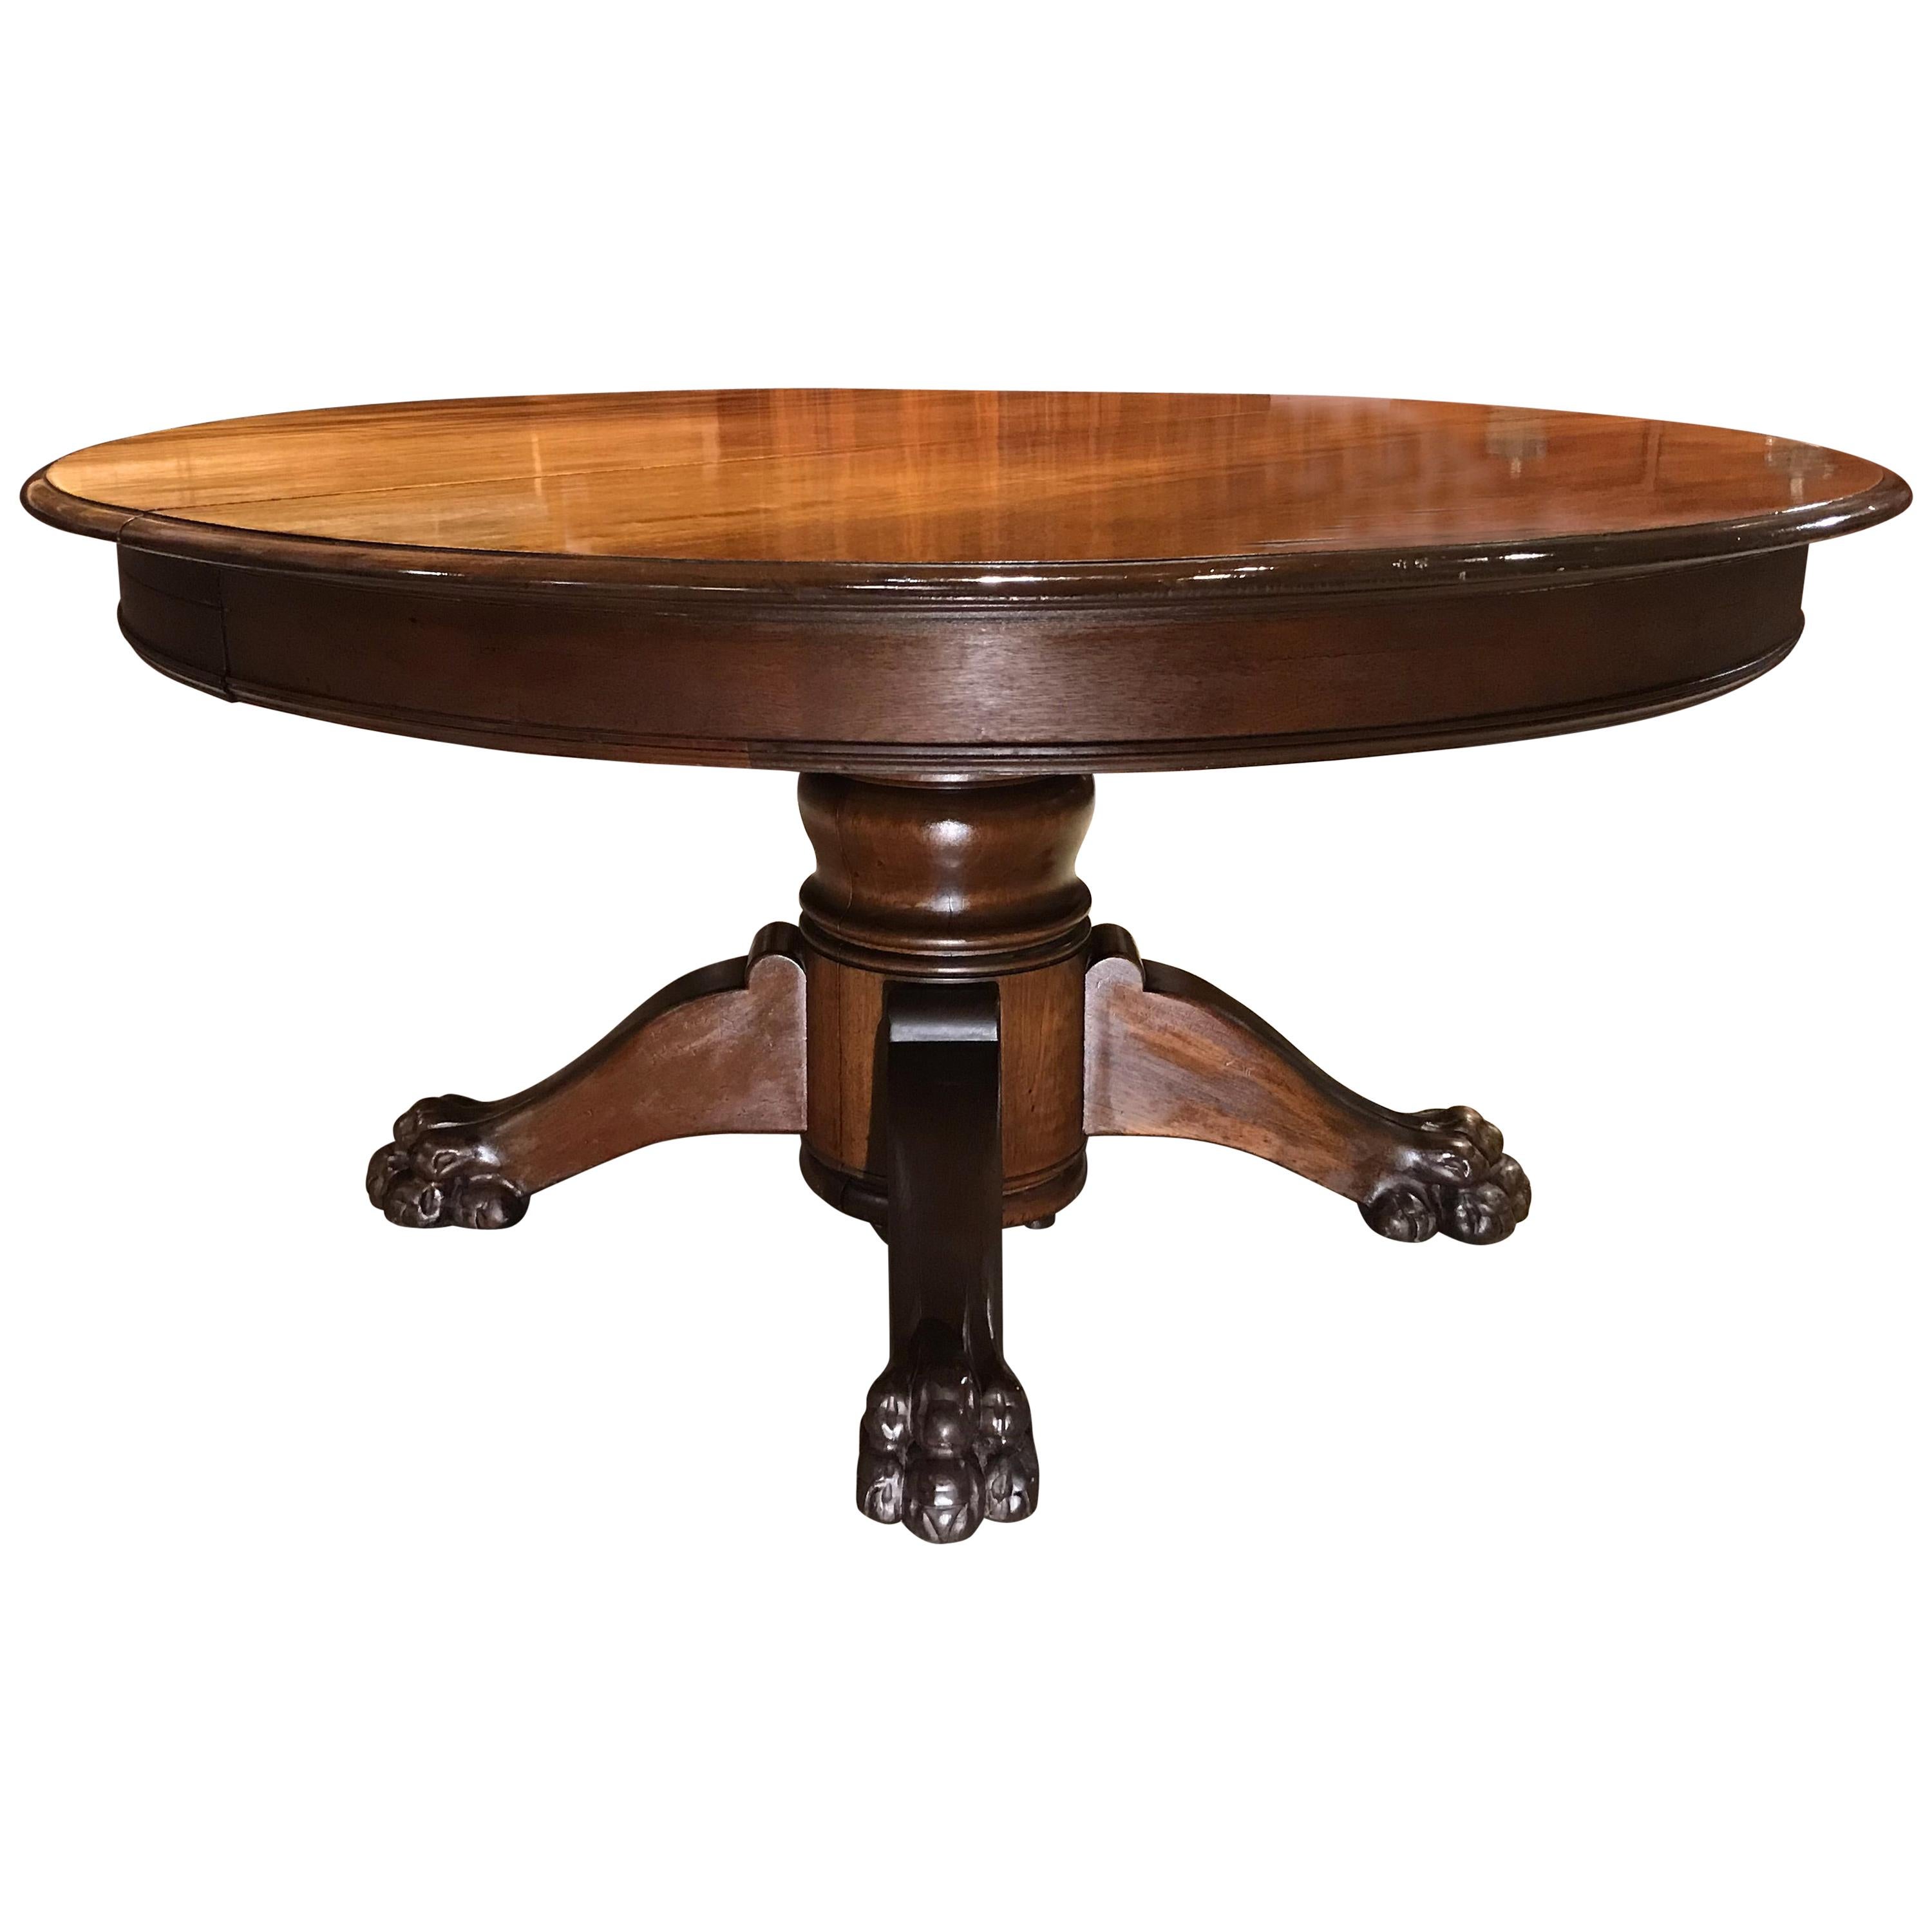 19th Century Mahogany Split Pedestal Round Dining Table with Splendid  Paw Feet